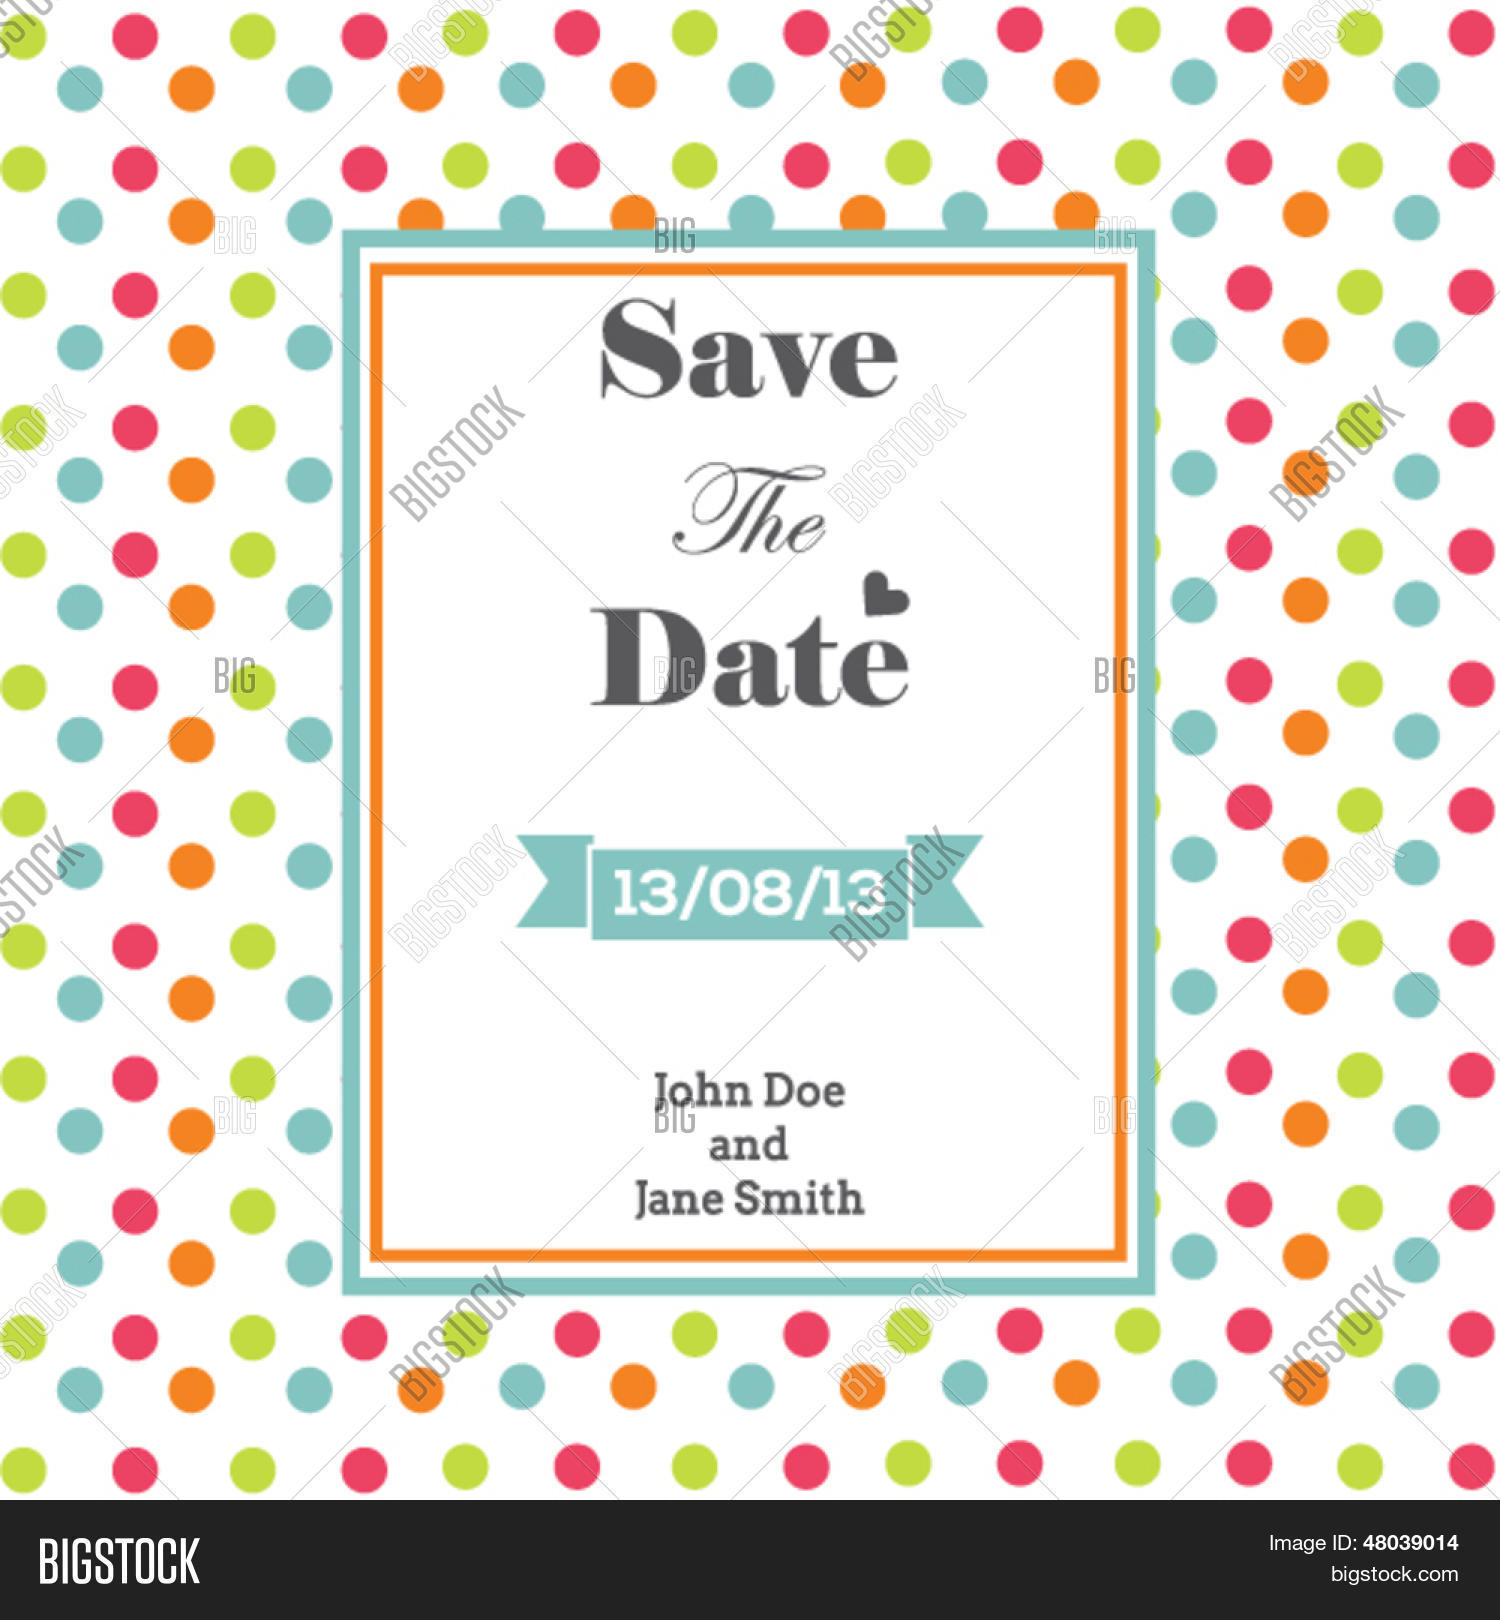 Polka dots free invitation wedding psd template